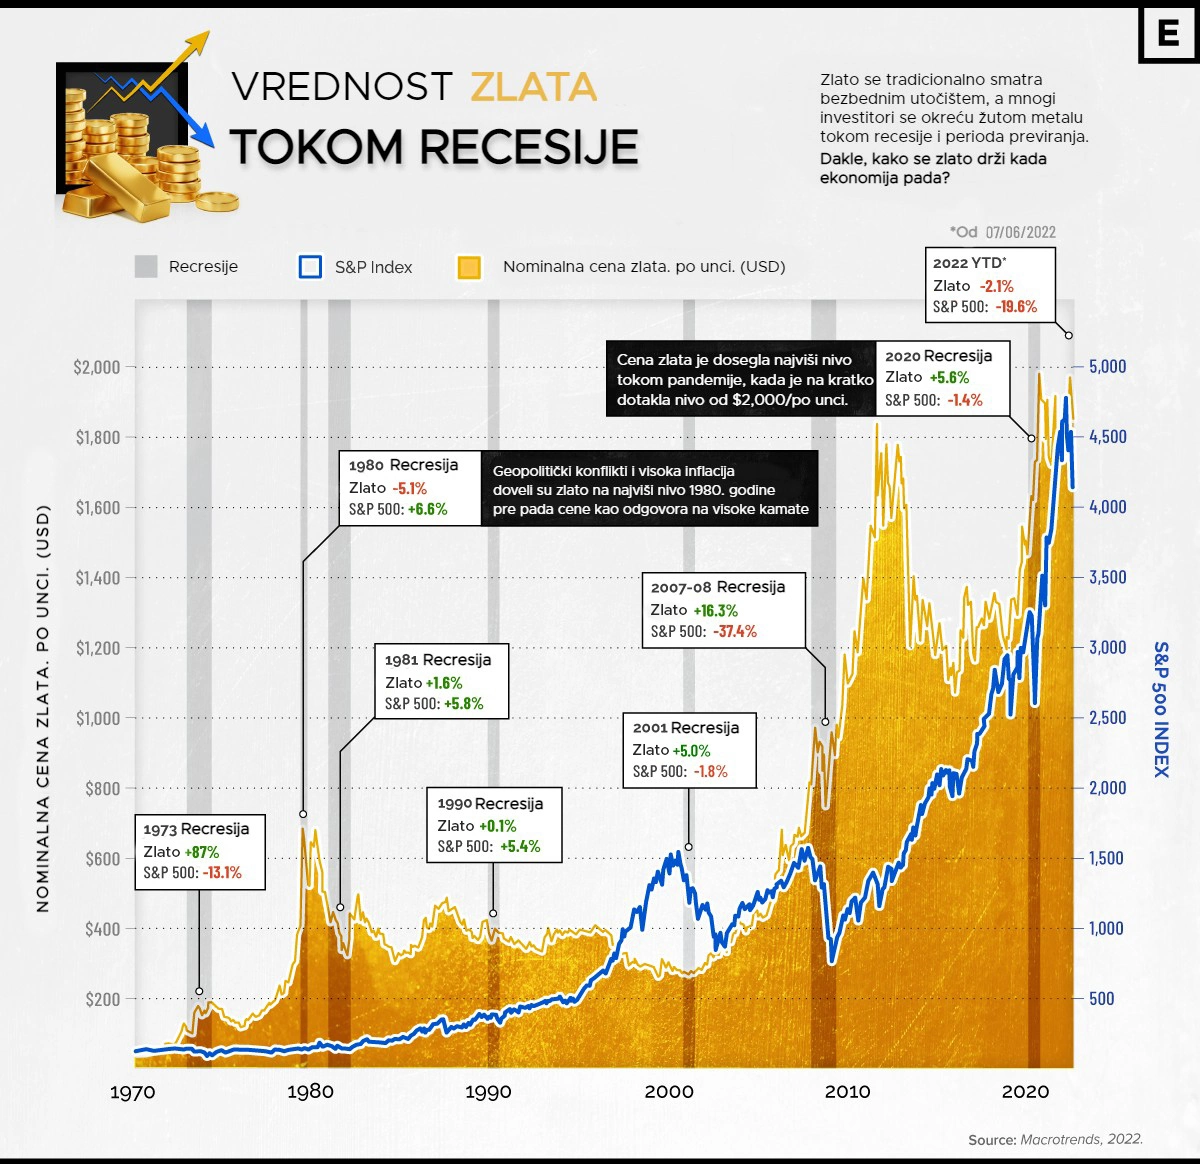  da-li-se-vrednost-zlata-povecava-tokom-recesije